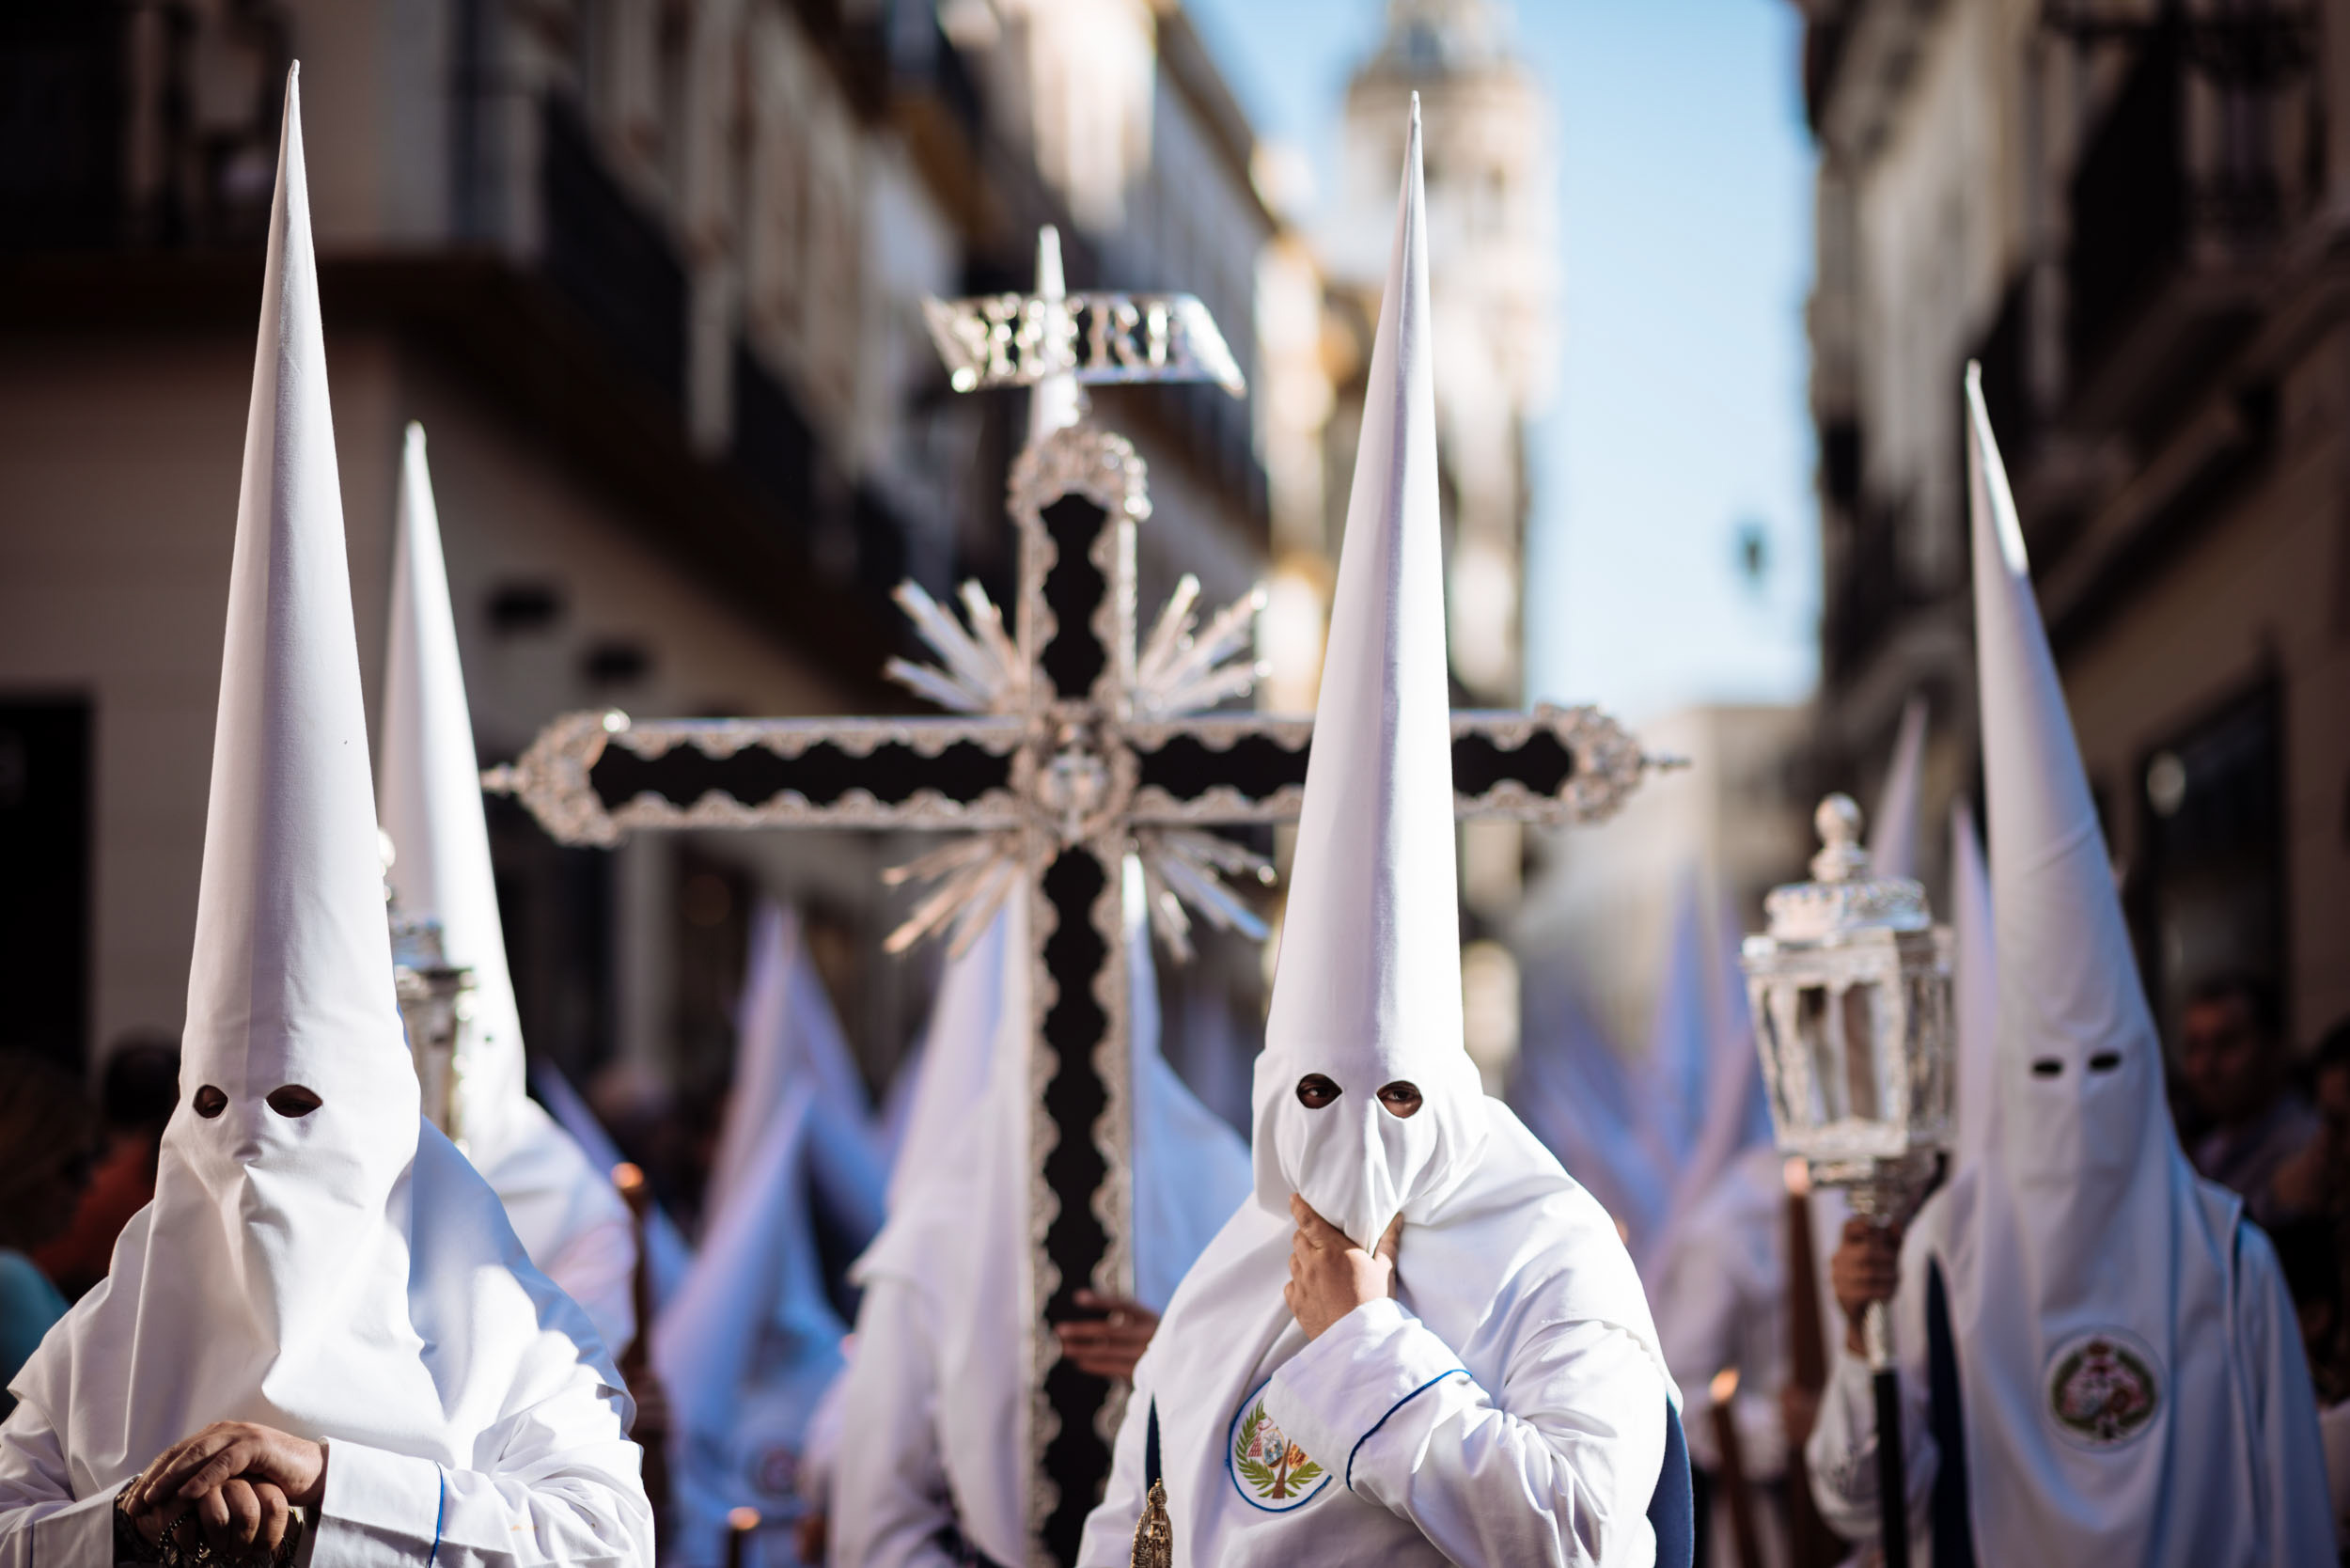 penitents-robes-tradition-procession-christianity-catholic-semana-santa-holy-week-seville-andalucia-spain